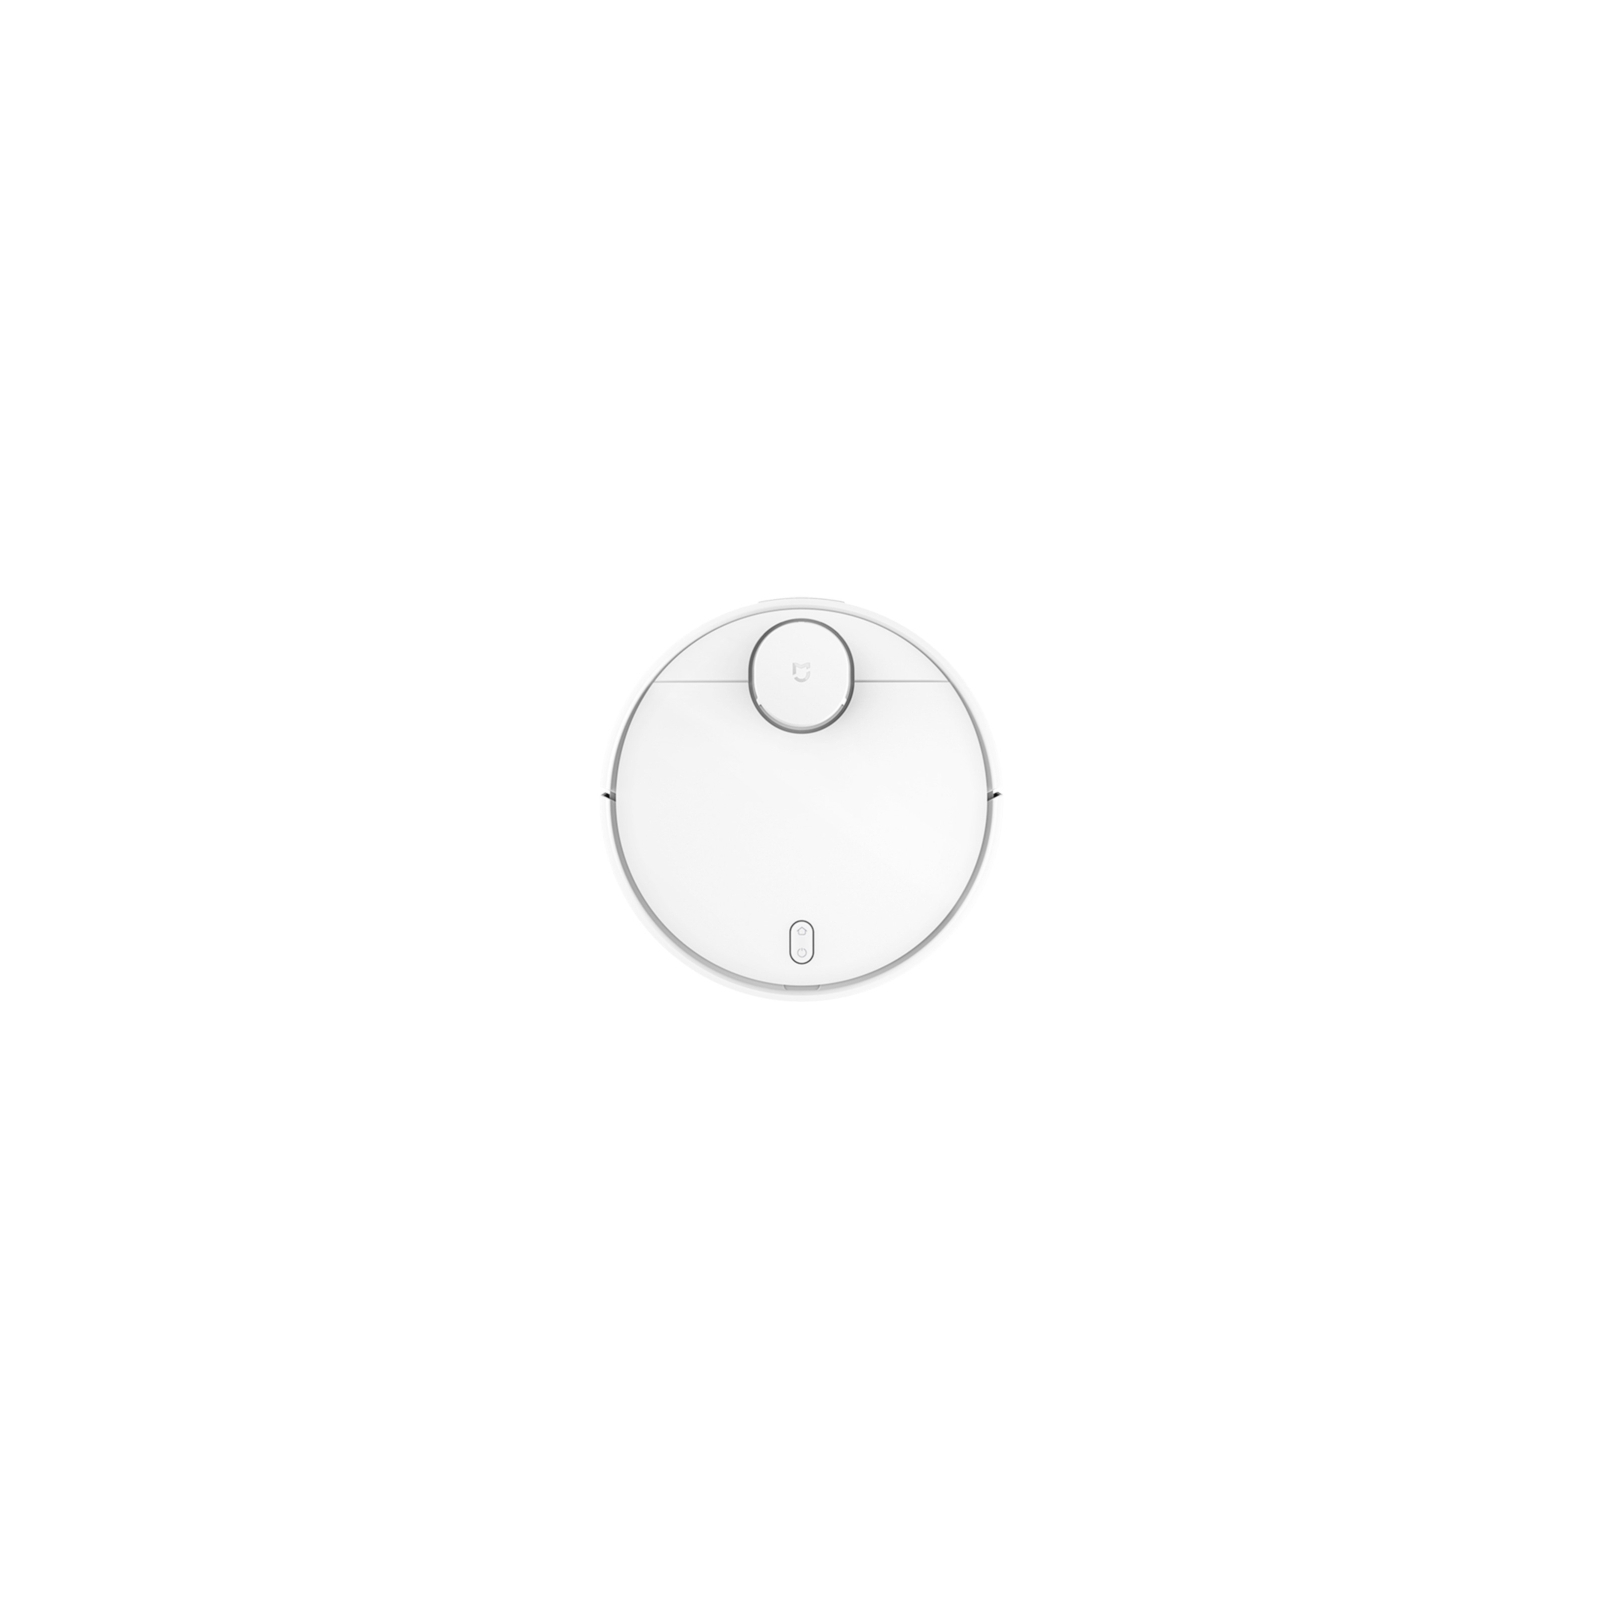 Пылесос Xiaomi Mi Robot Vacuum Cleaner white (STYJ02YM)